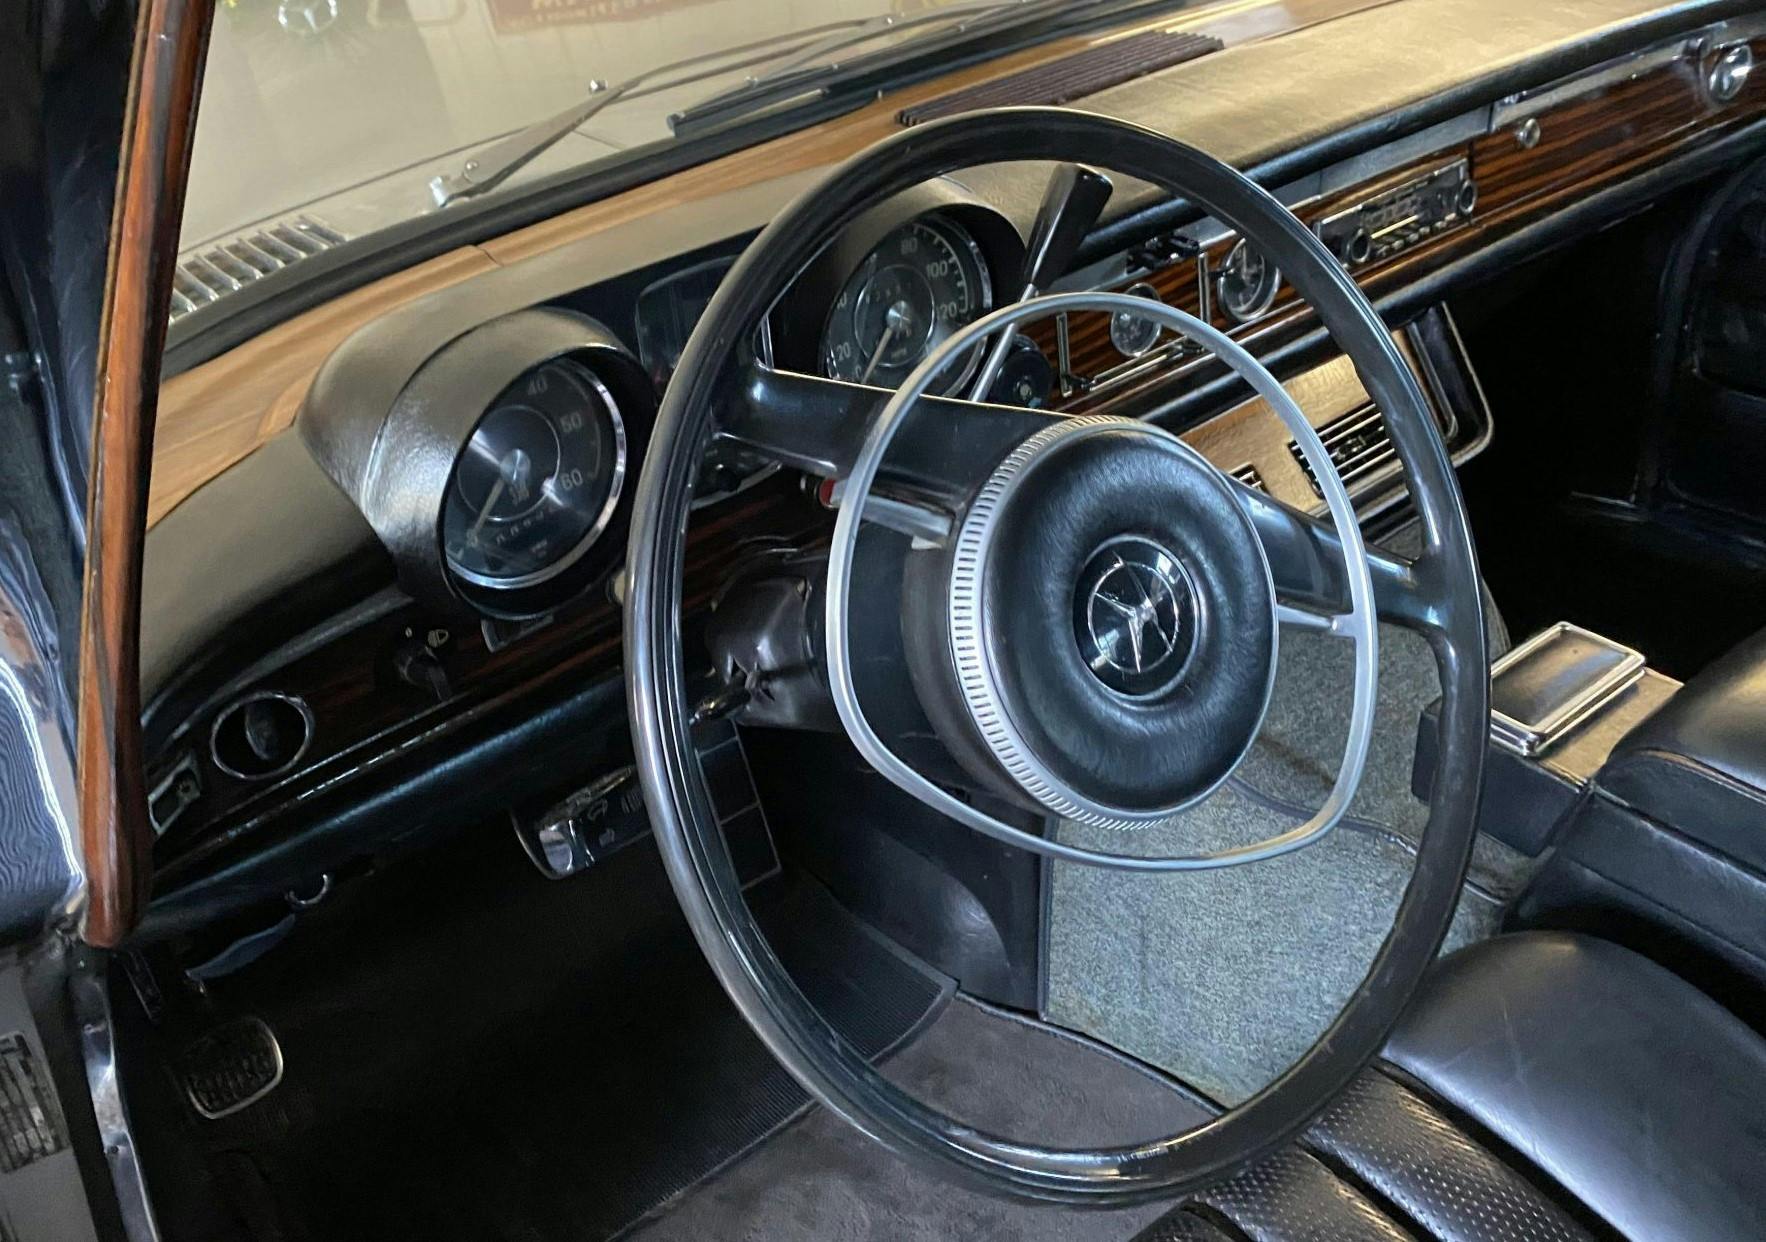 1969 Mercedes-Benz 600 Elvis car interior steering wheel